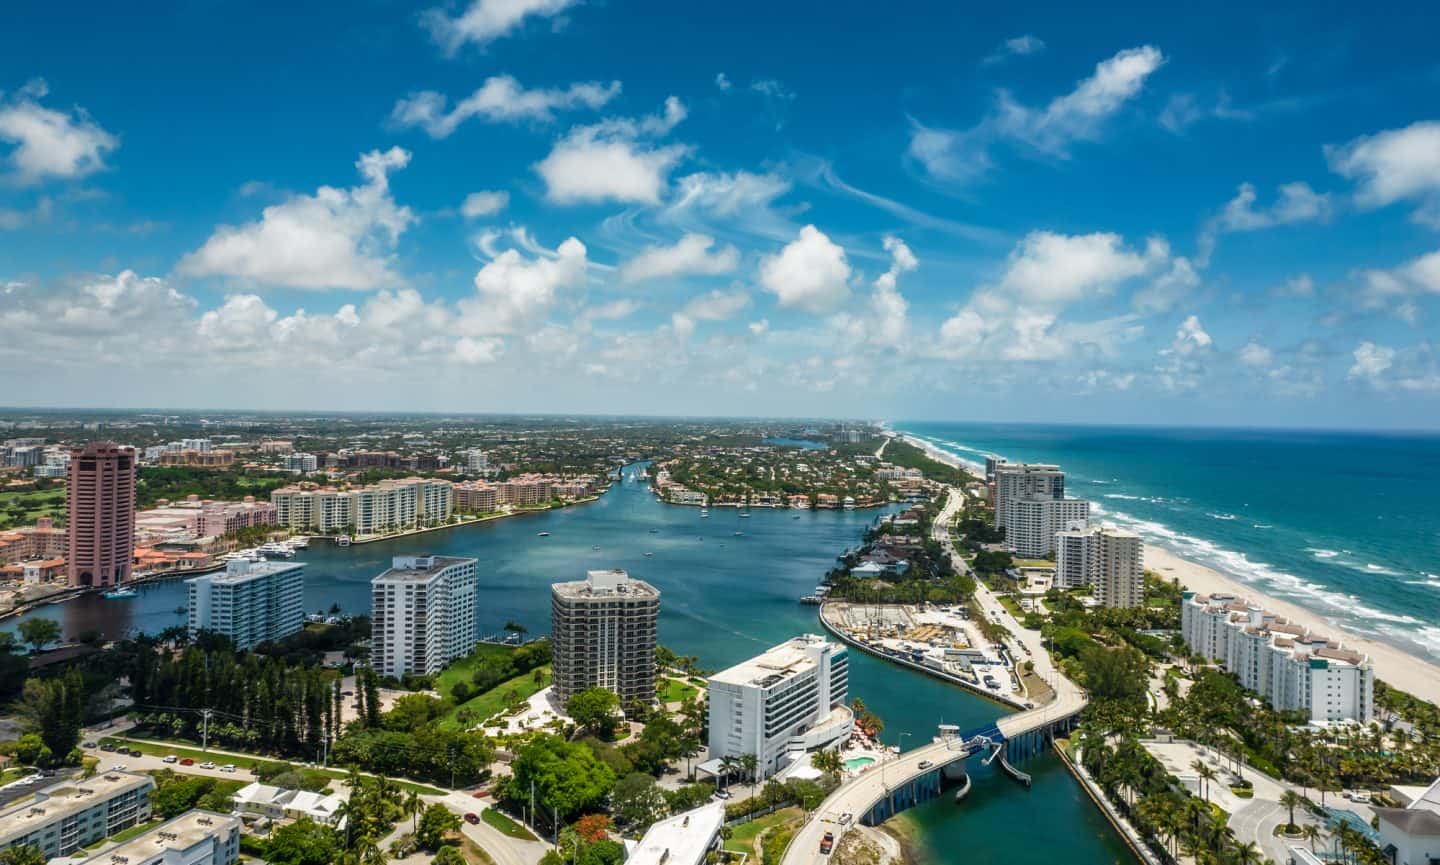 Boca Raton Florida aerial view